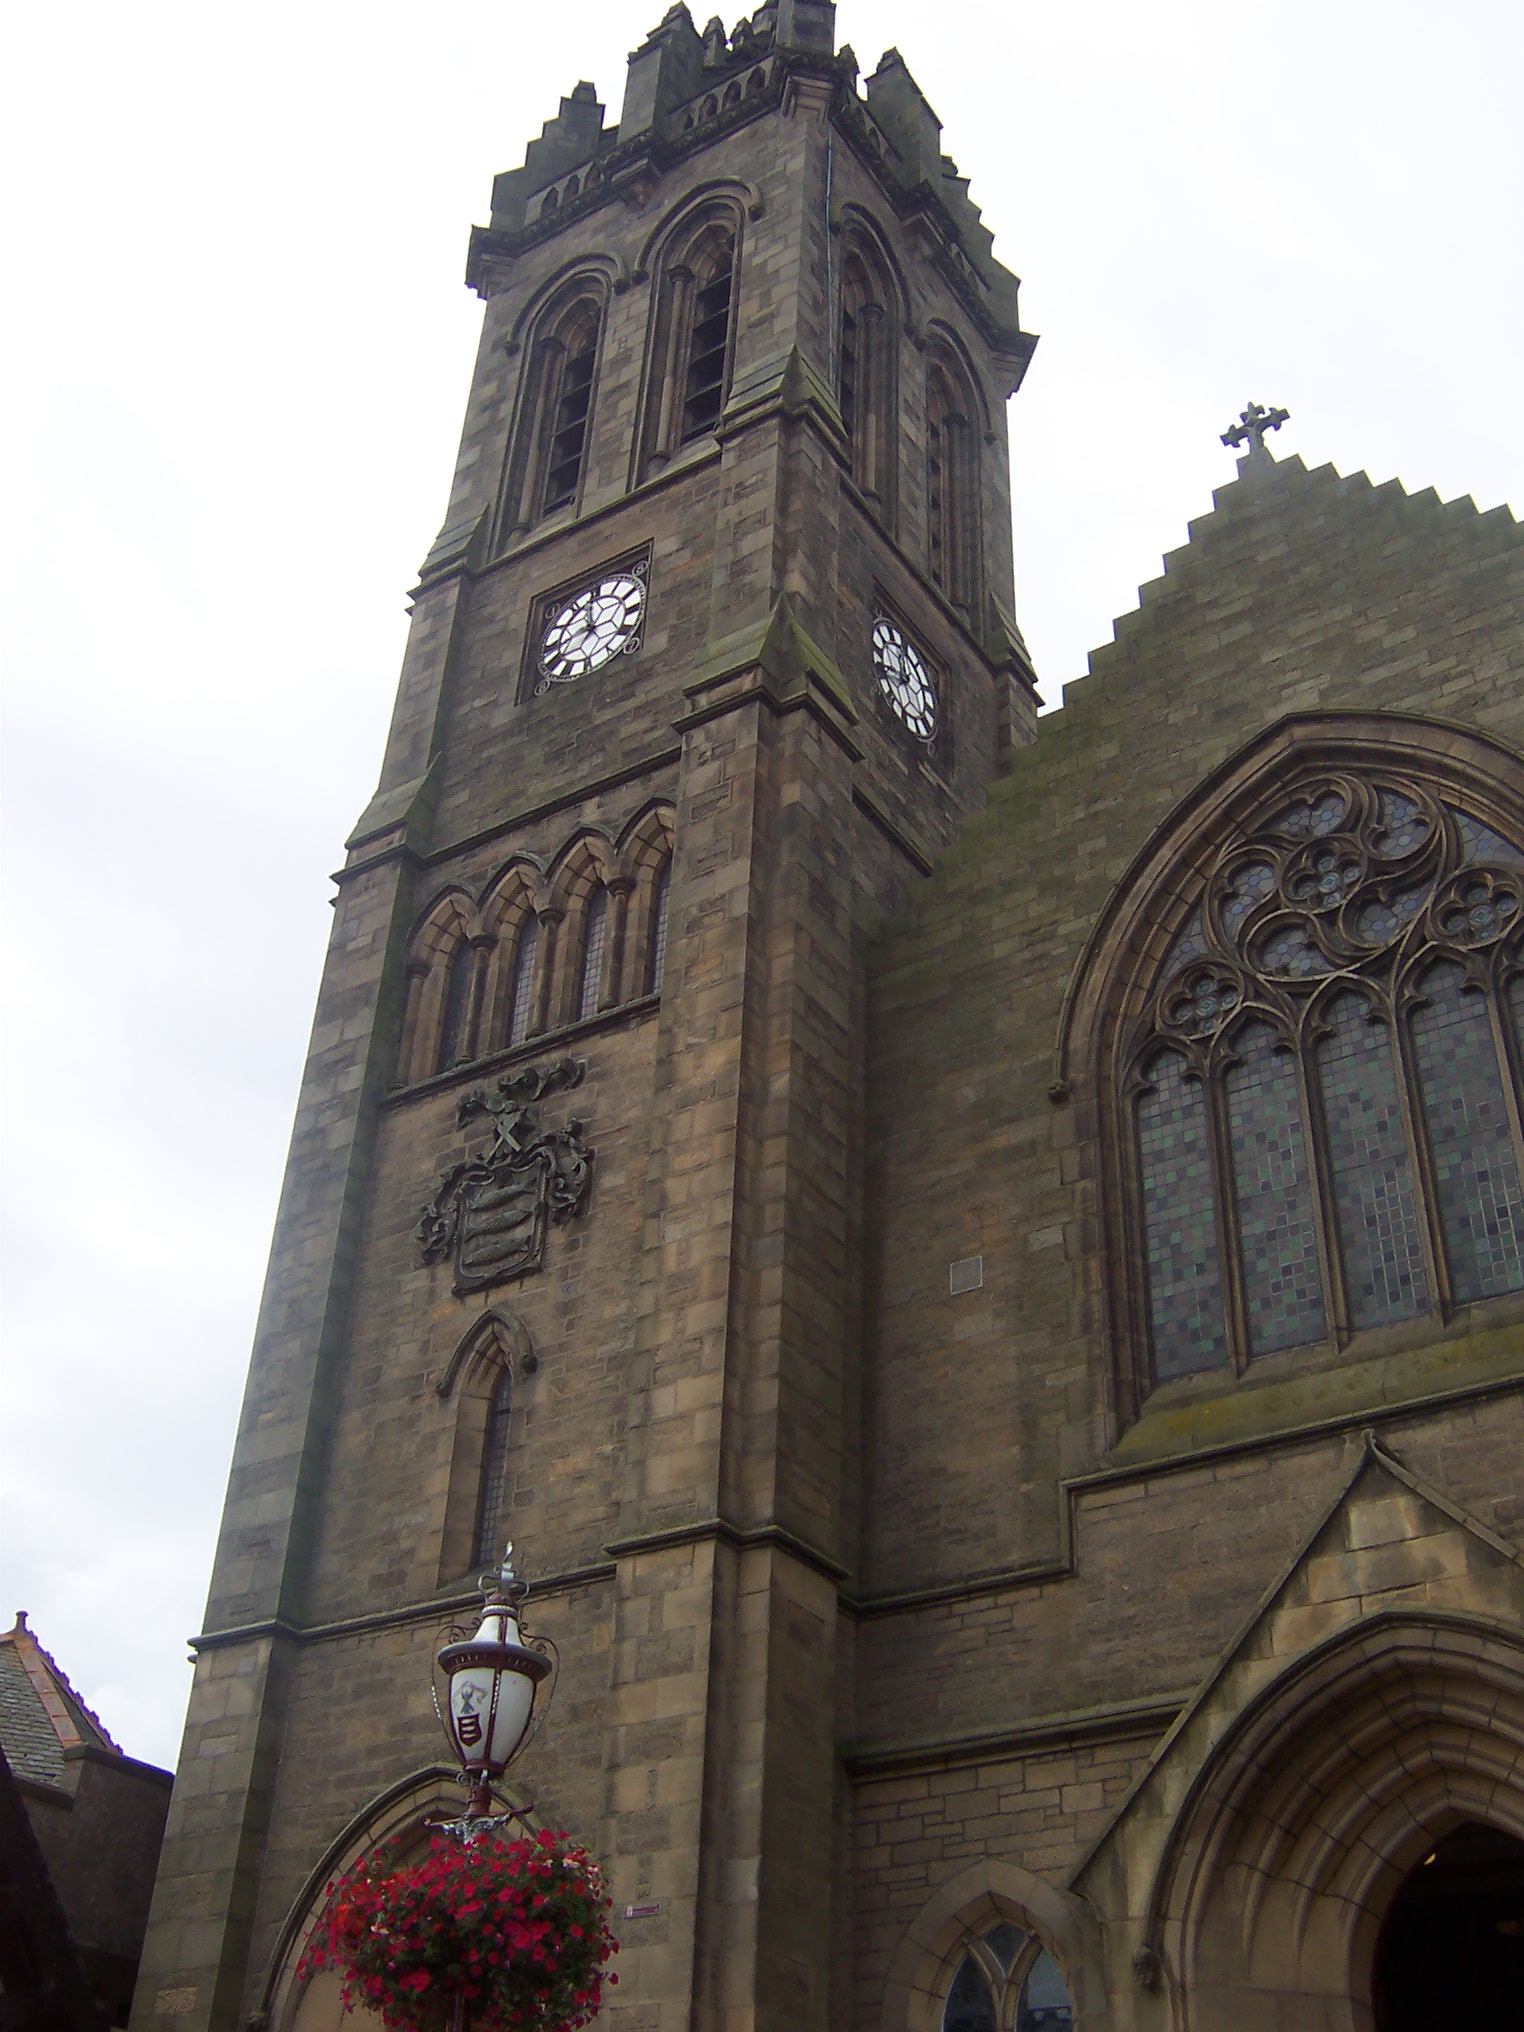 File:Old Parish Church of Peebles Clock Tower.jpg - Wikimedia Commons